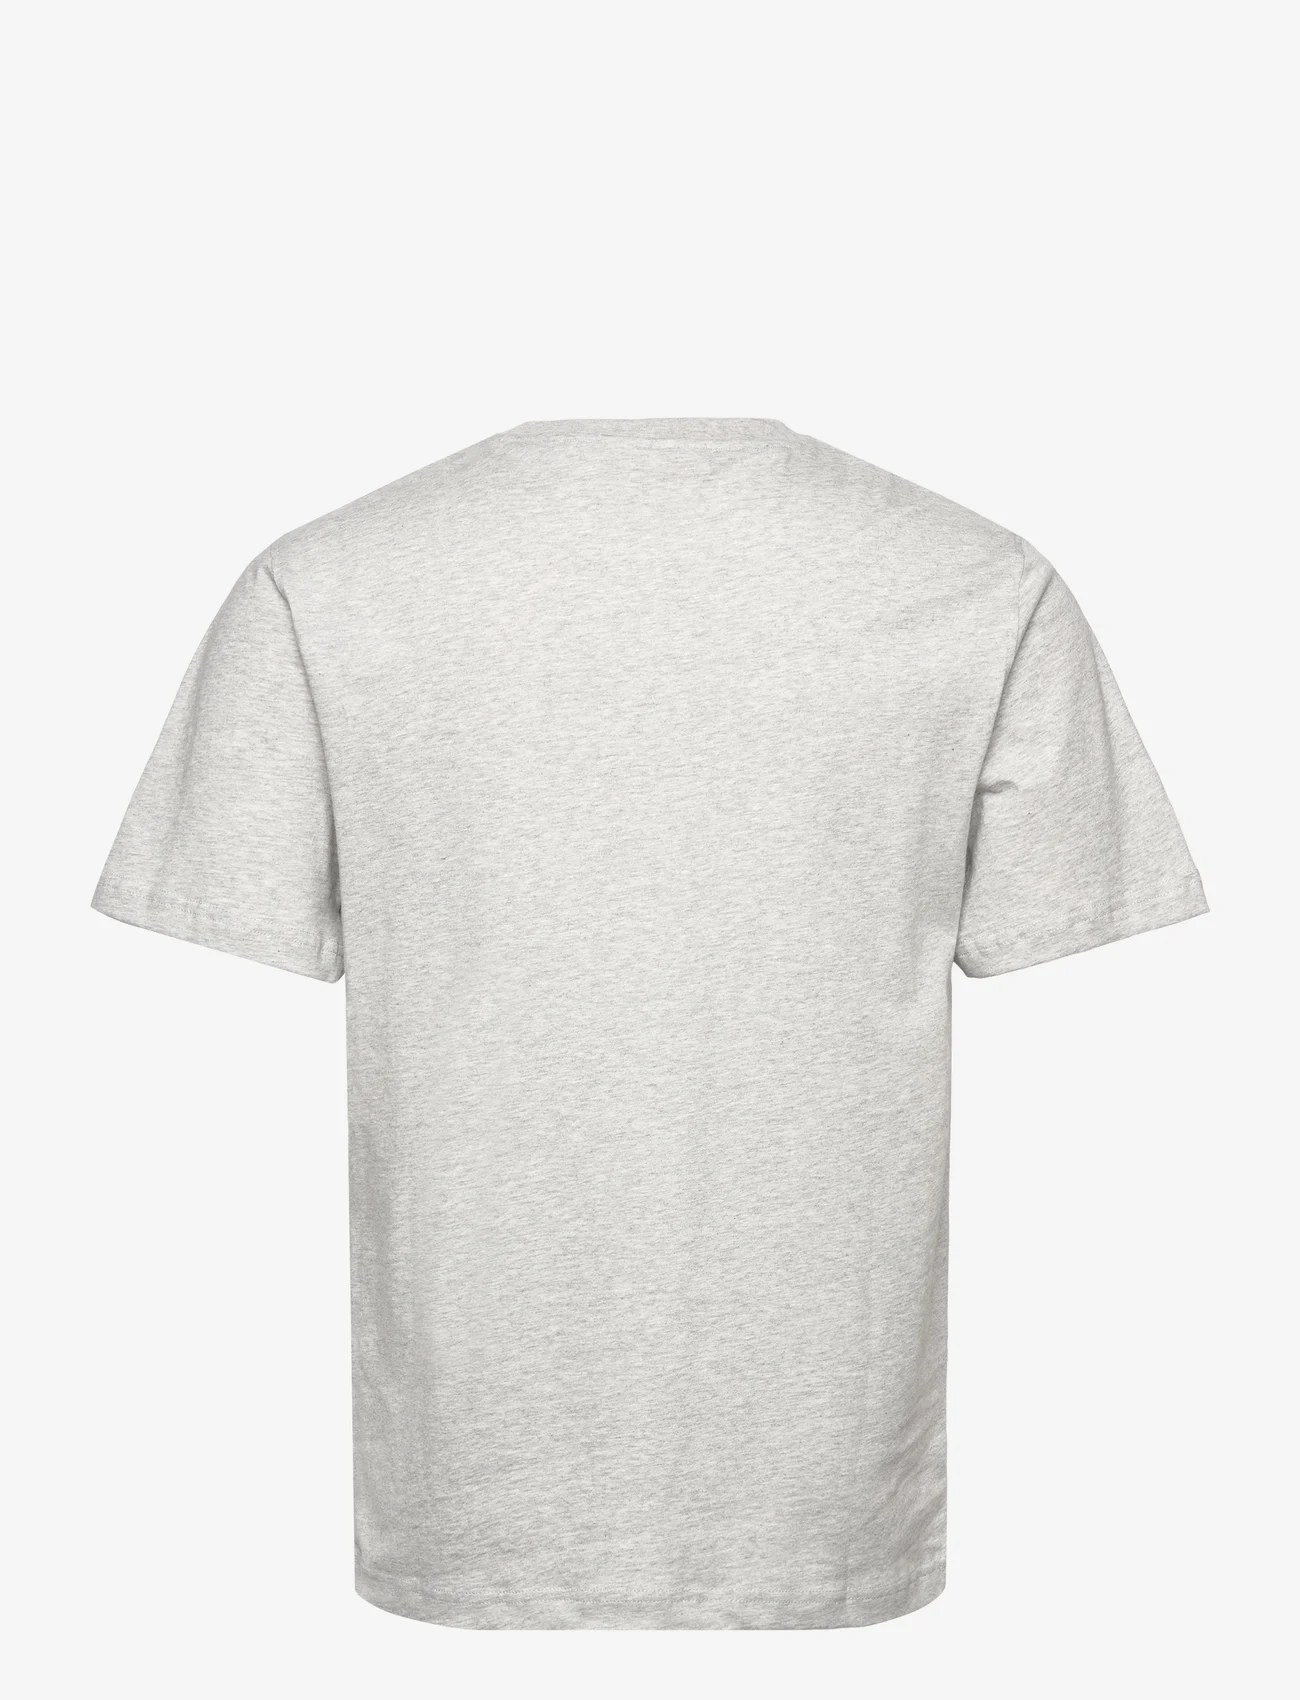 HAN Kjøbenhavn - Regular T-shirt Short sleeve - krótki rękaw - grey melange - 1